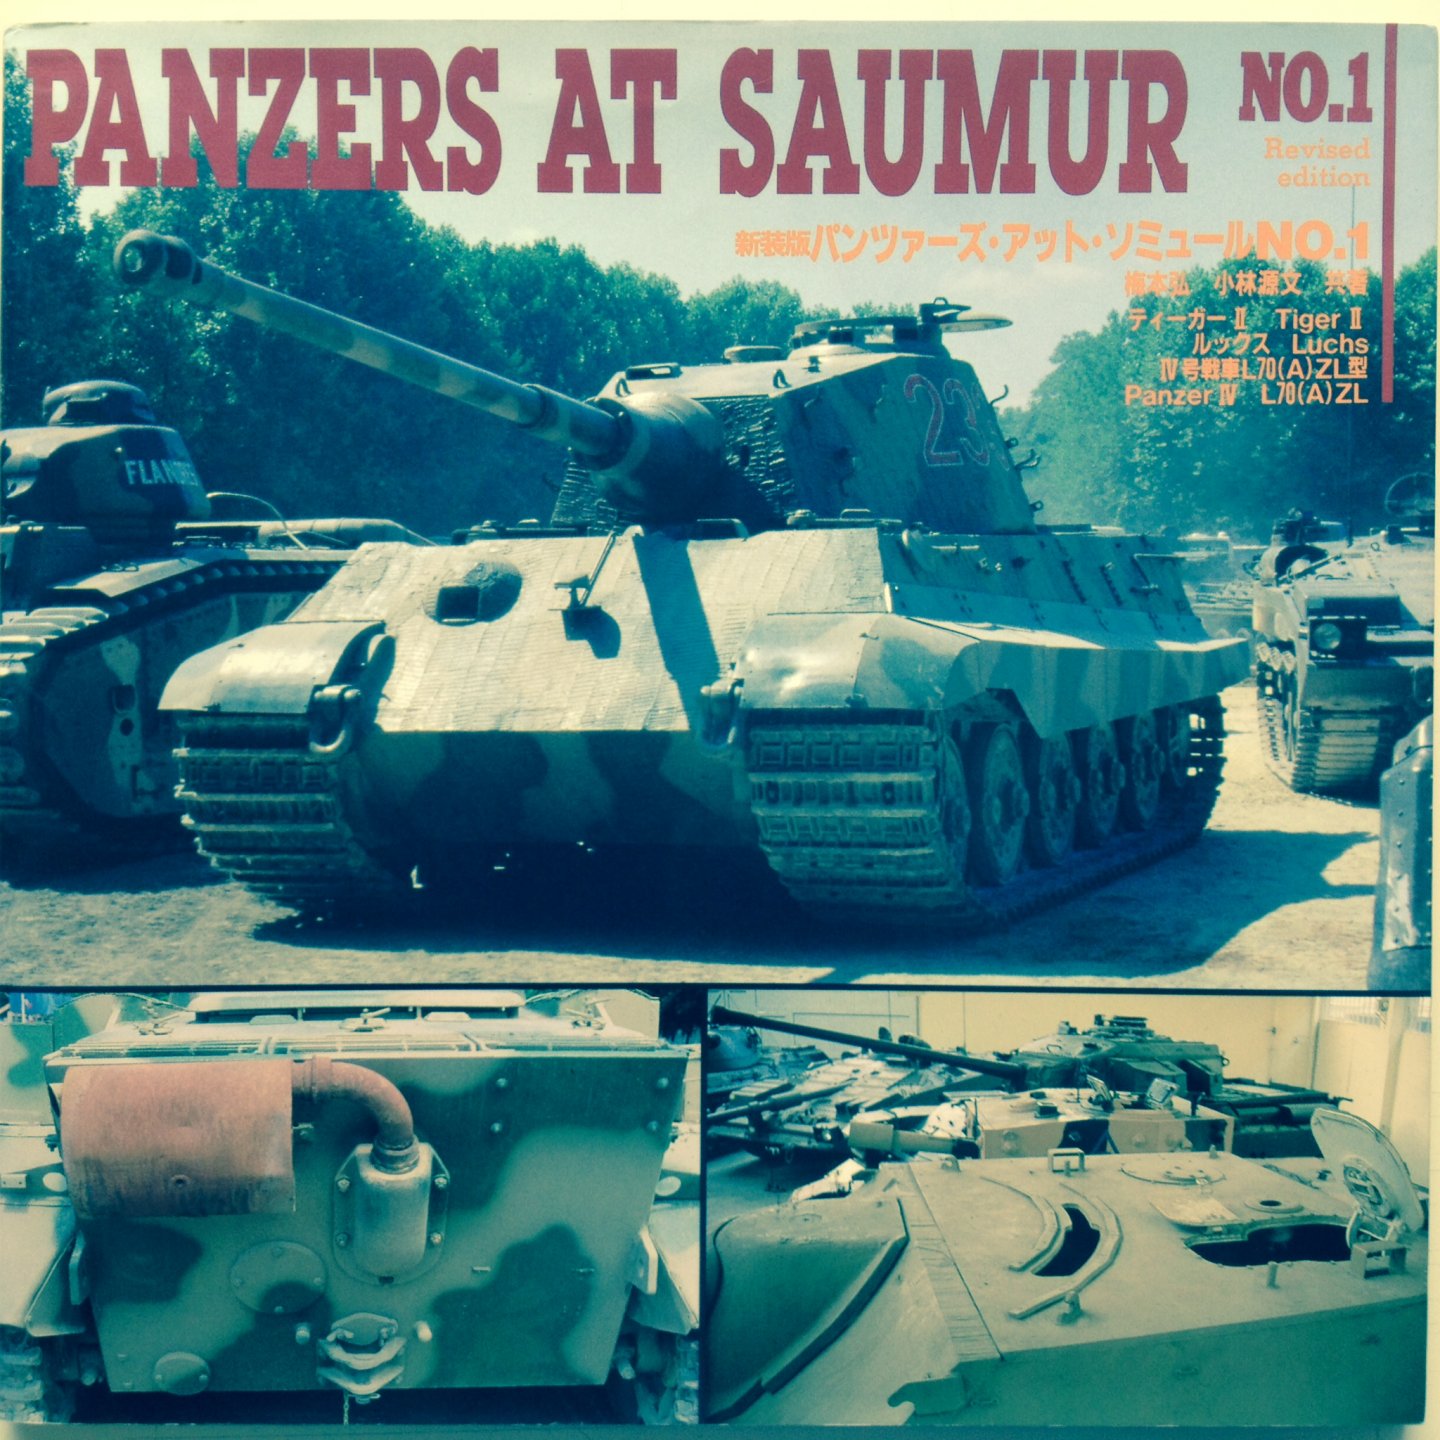 Ichimura, Hiroshi. - Panzers in Saumur. No.1. Tiger II, Tank crew uniform, Luchs, Panzer IV L70(A), Panzer Division Insignia.